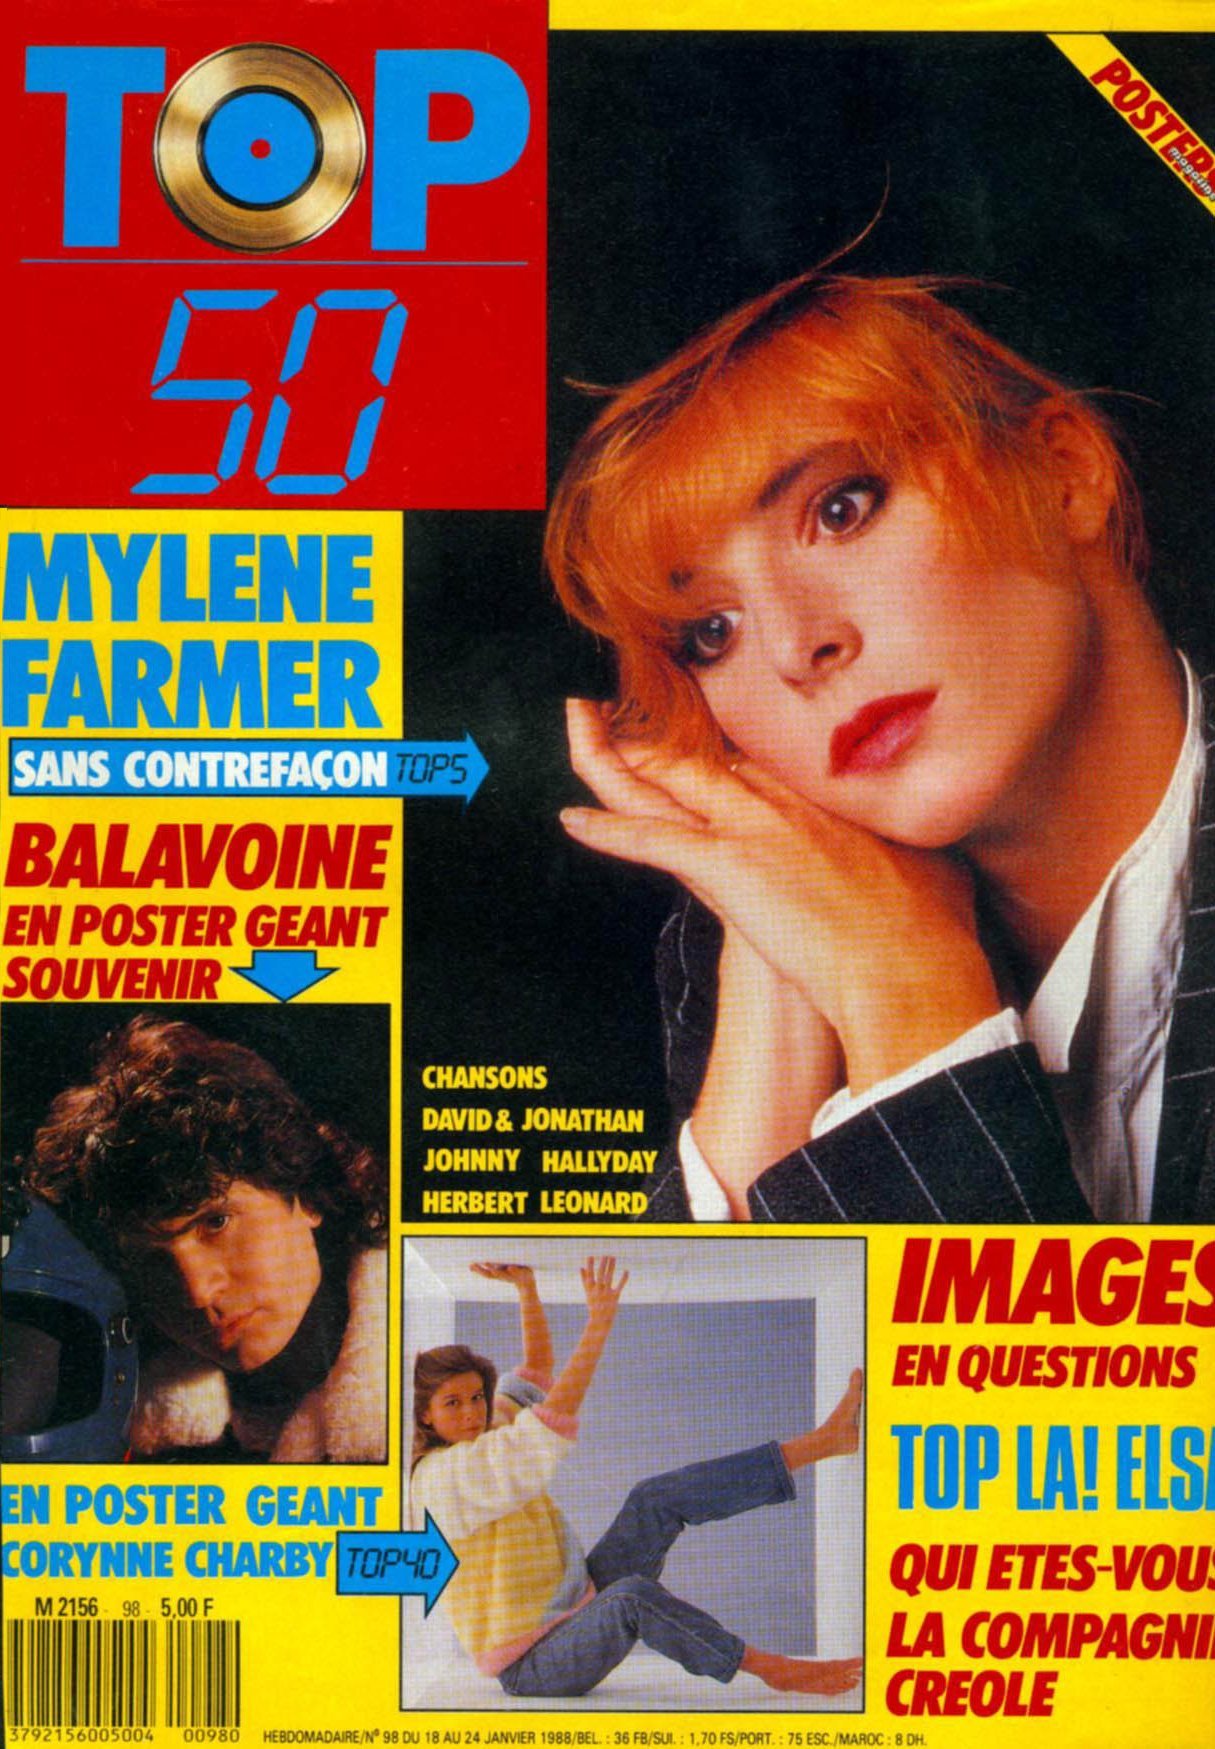 Top 50 18 janvier 1988